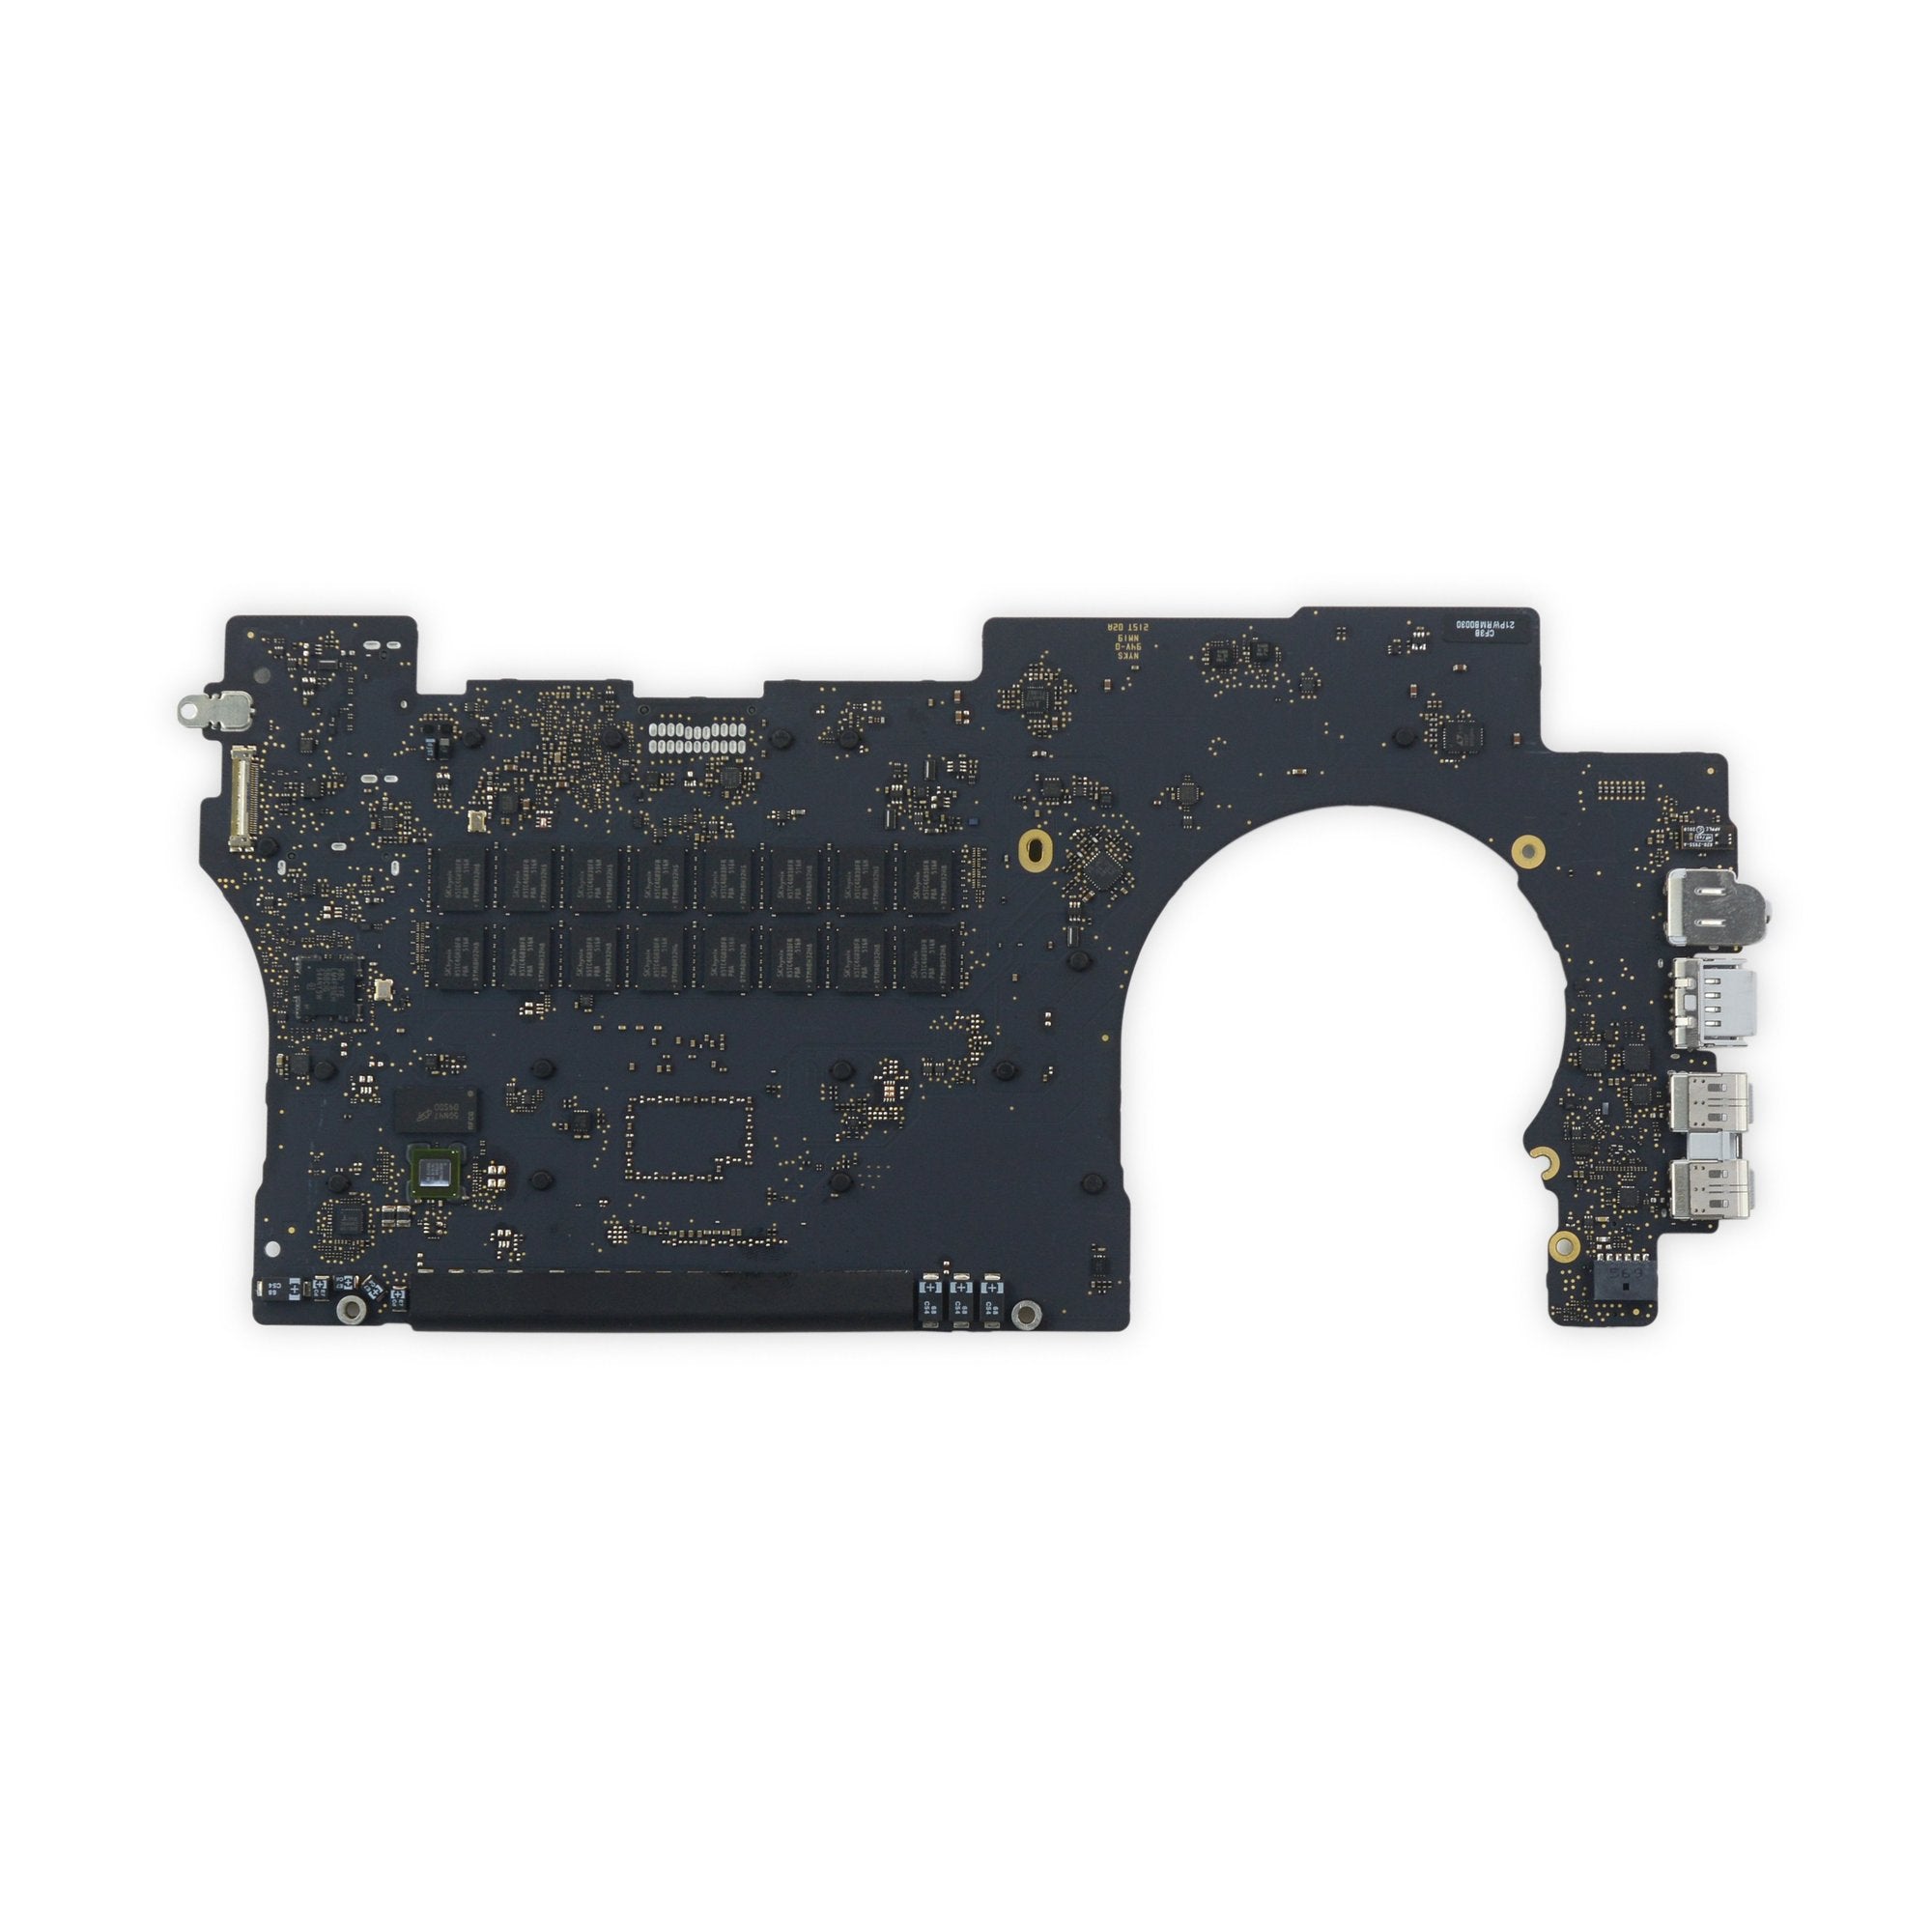 MacBook Pro 15" Retina (Mid 2015, Integrated Graphics) 2.2 GHz 16 GB RAM Logic Board Used